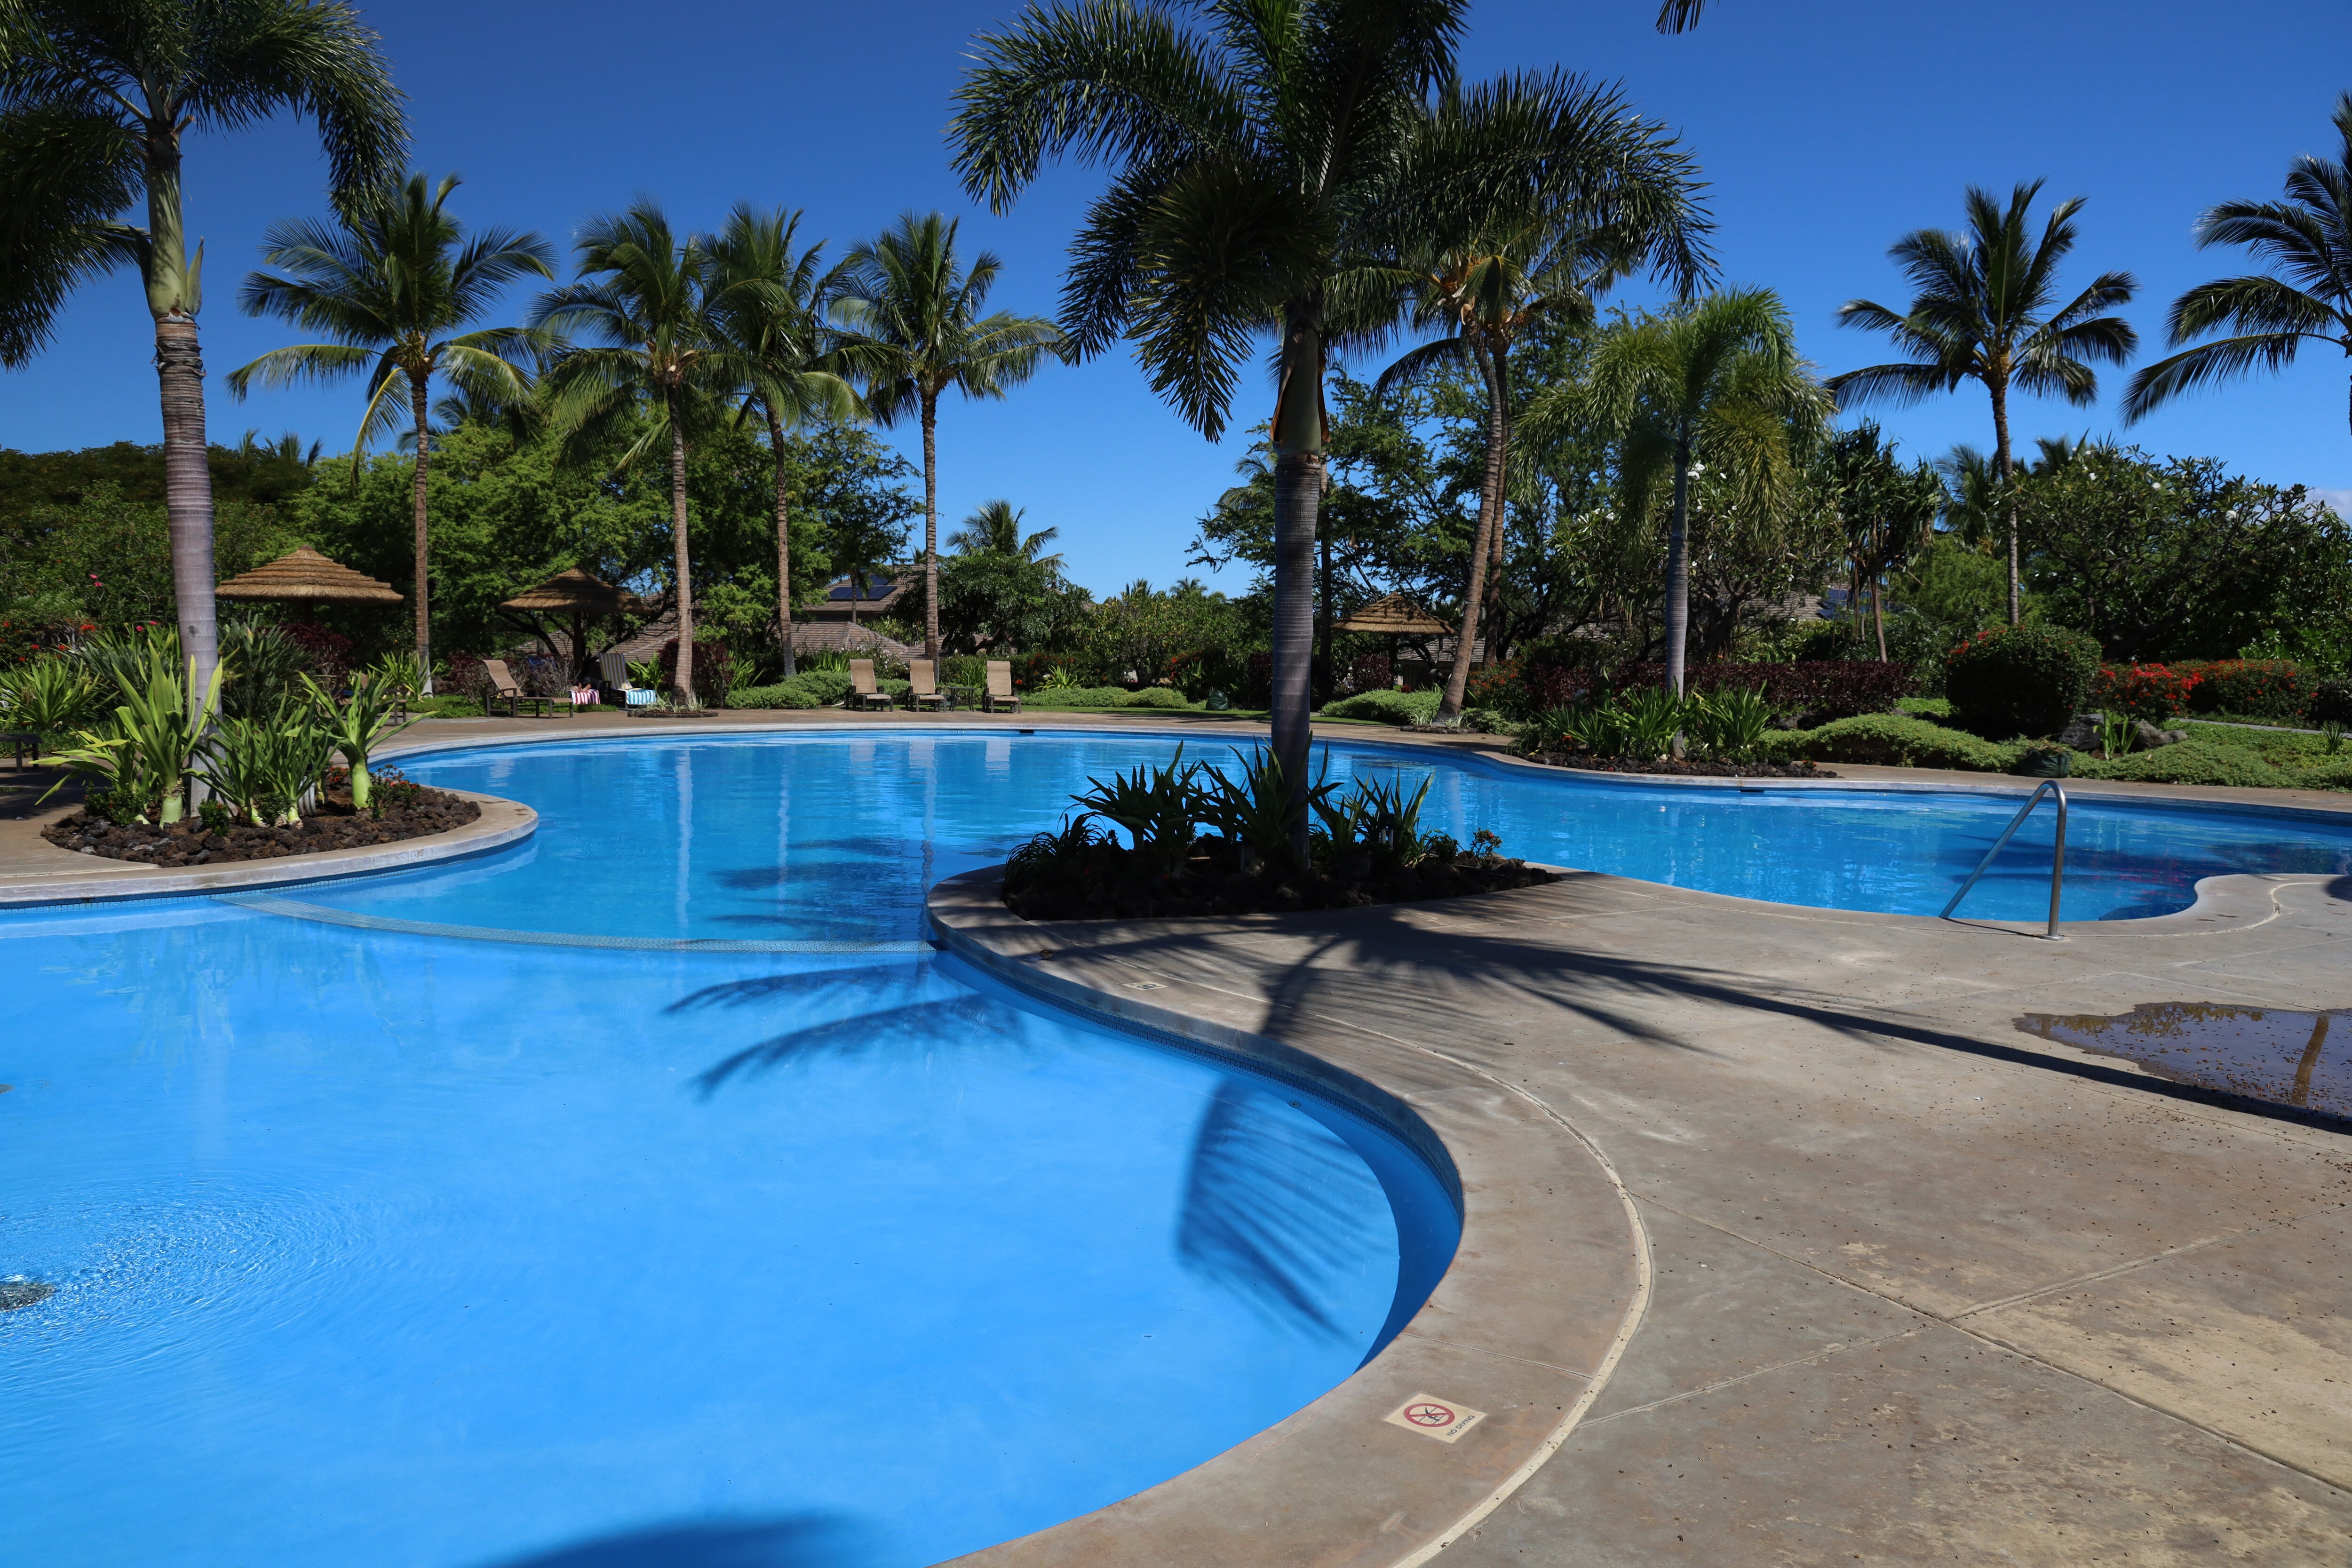 Freeform ohana pool with children's wading pool